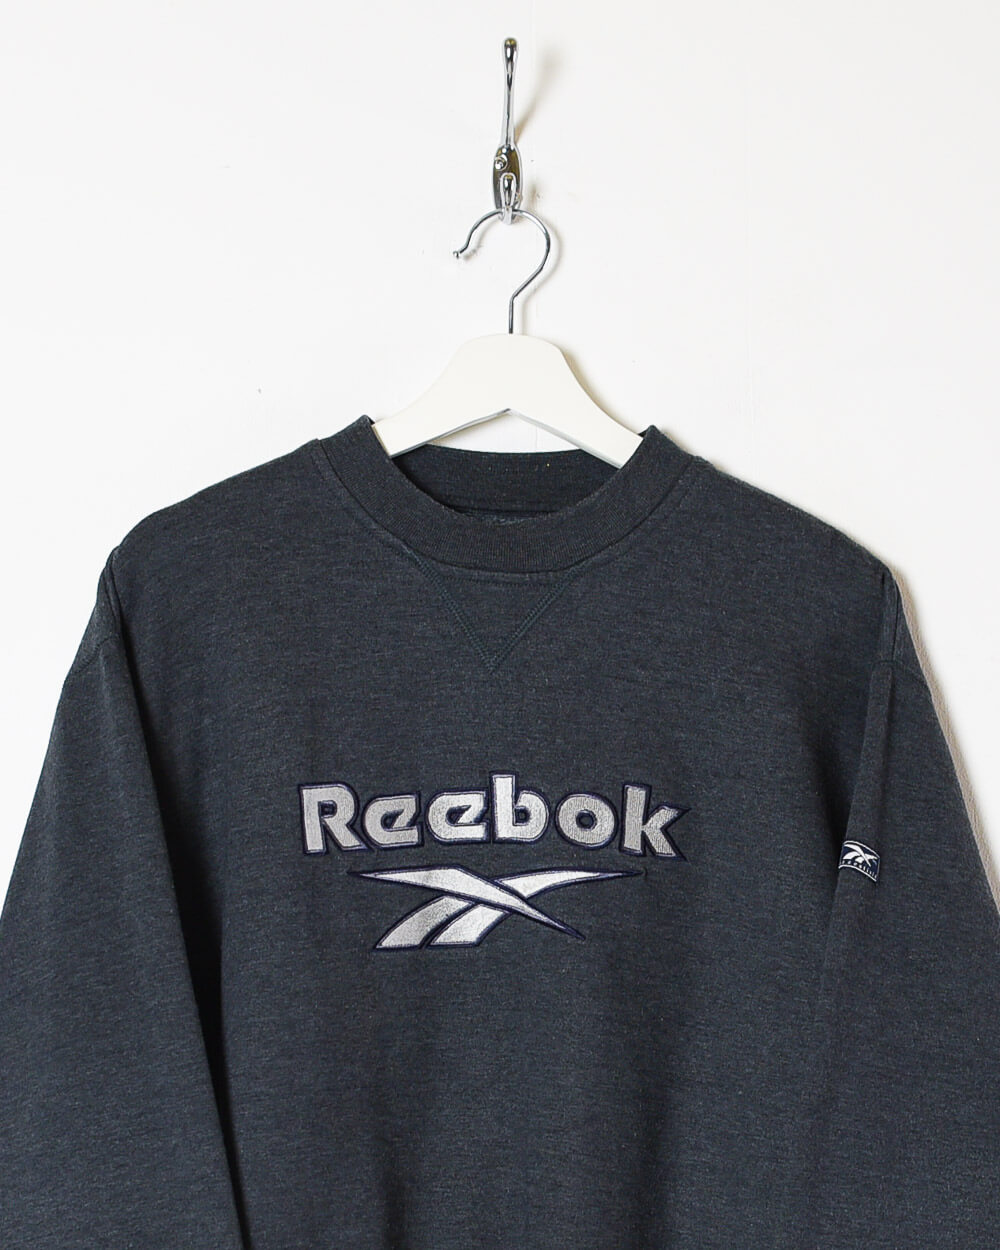 Grey Reebok Sweatshirt - Small